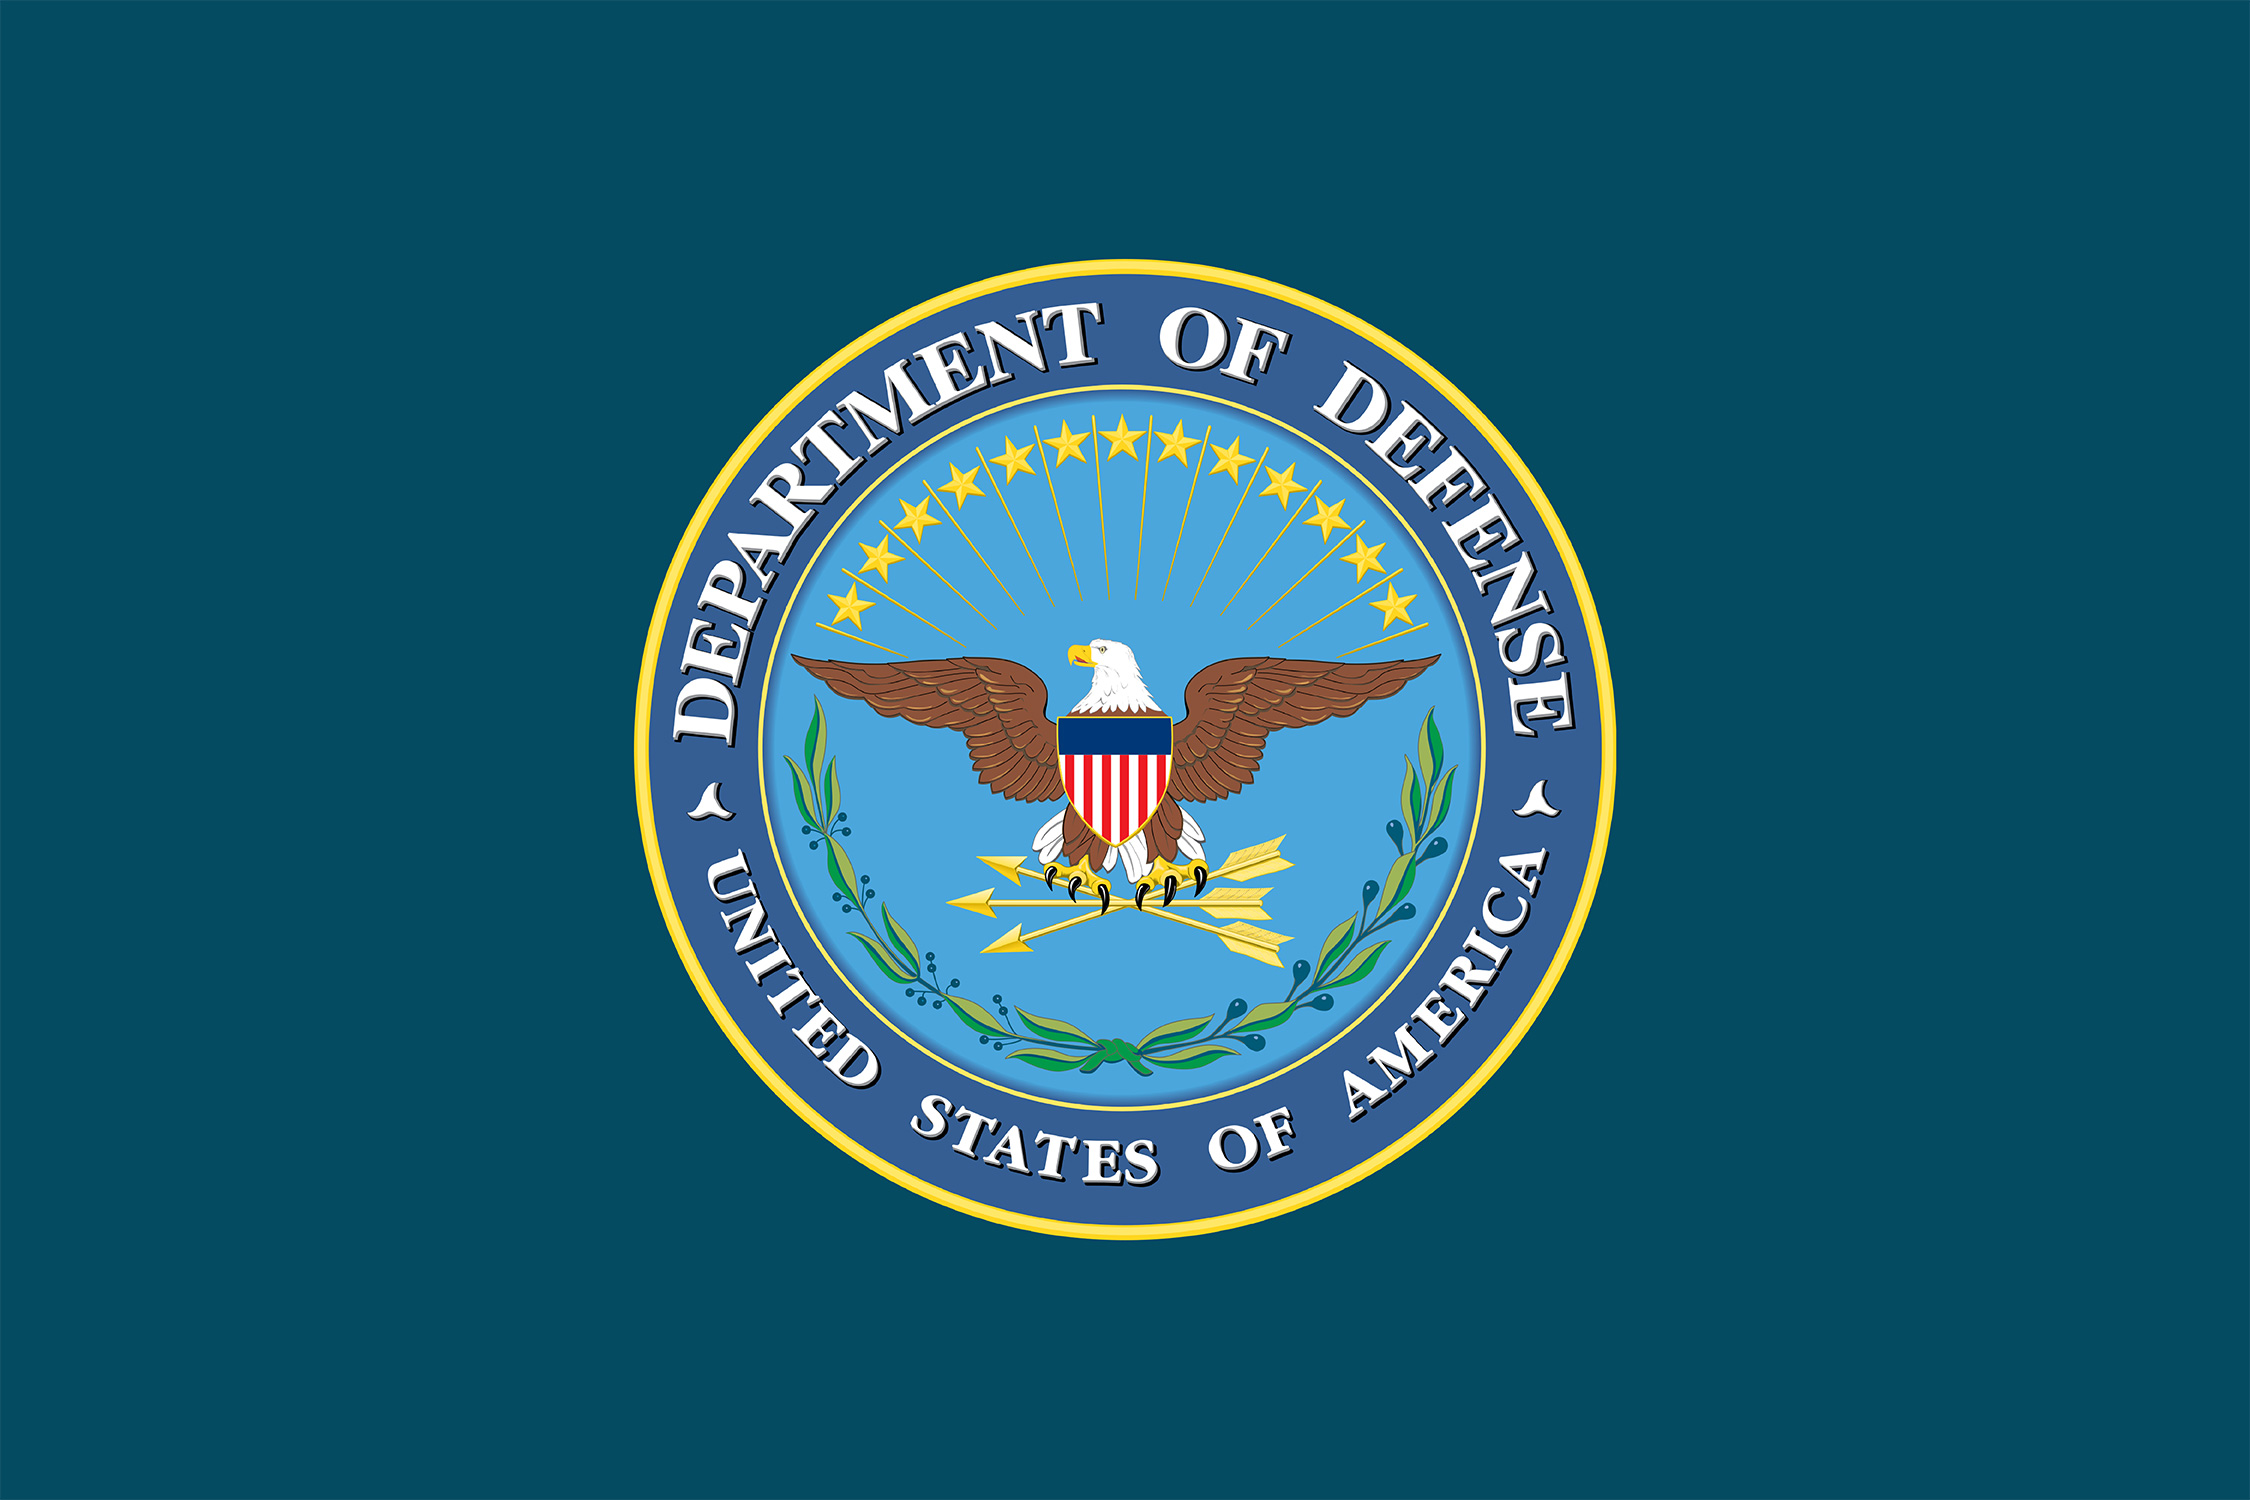 US Defense Dept seal